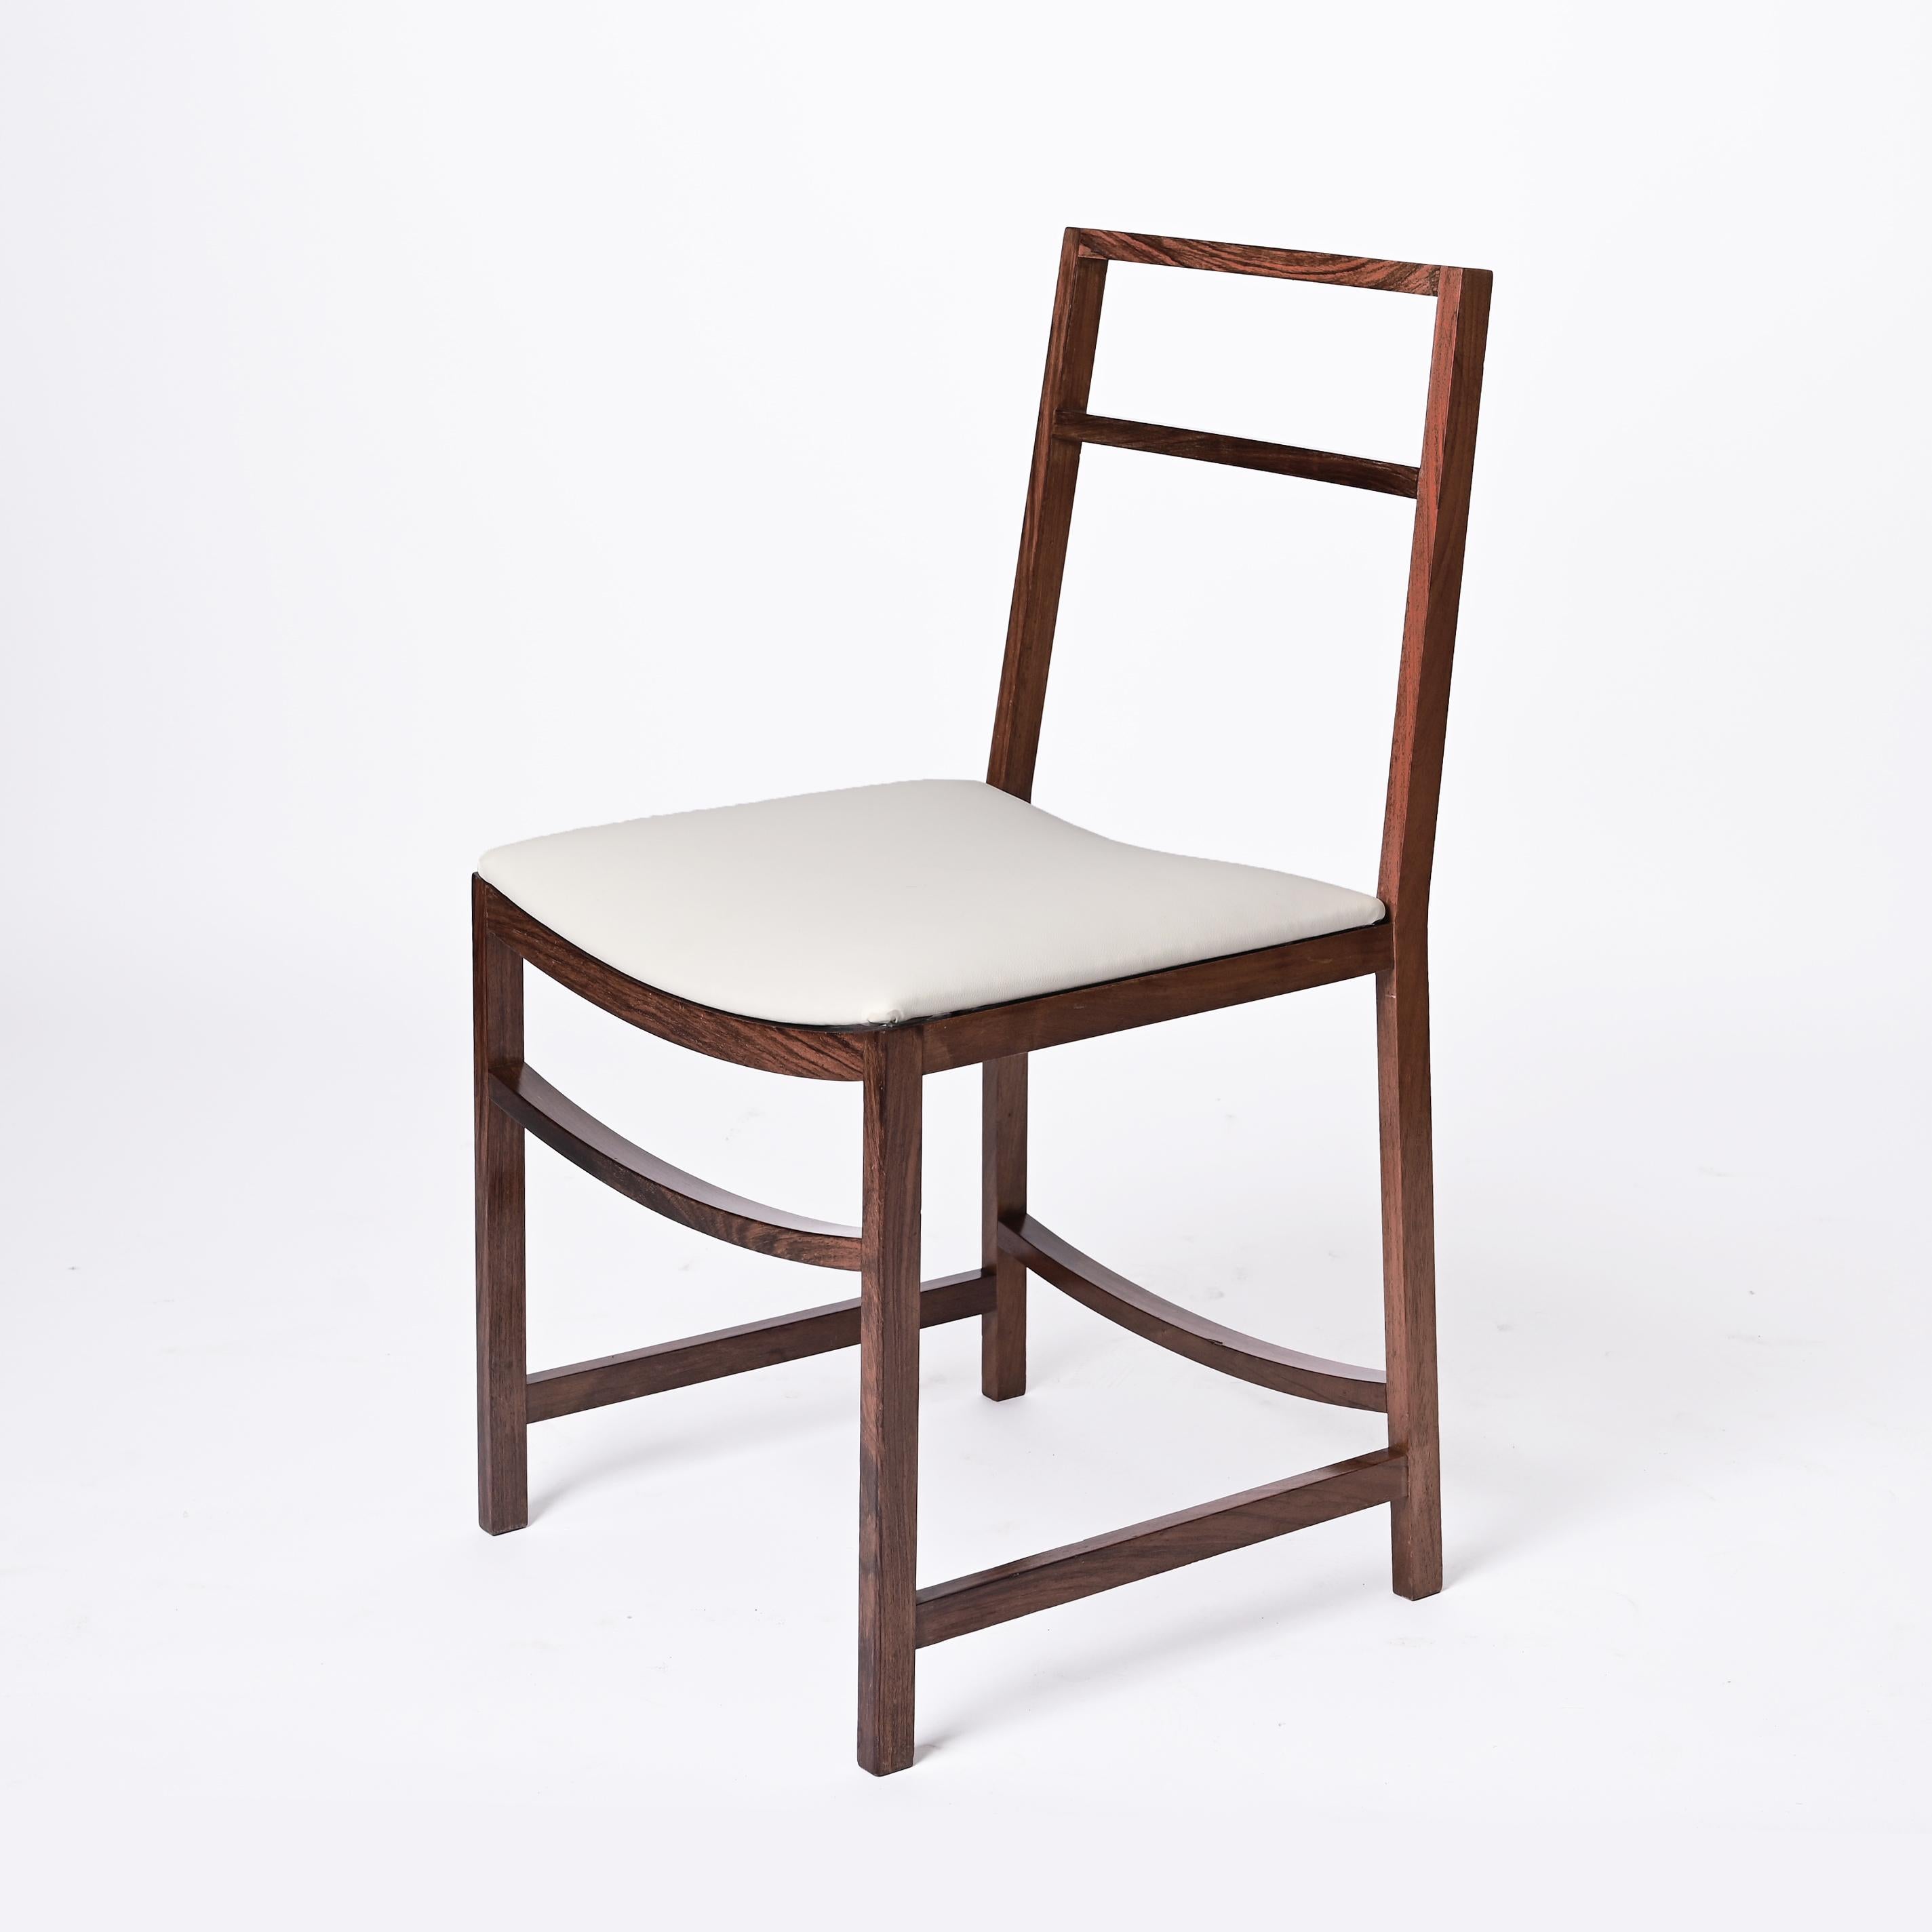 Midcentury Italian Dining Chairs in Teak, Renato Venturi for MIM Roma, 1960s For Sale 3